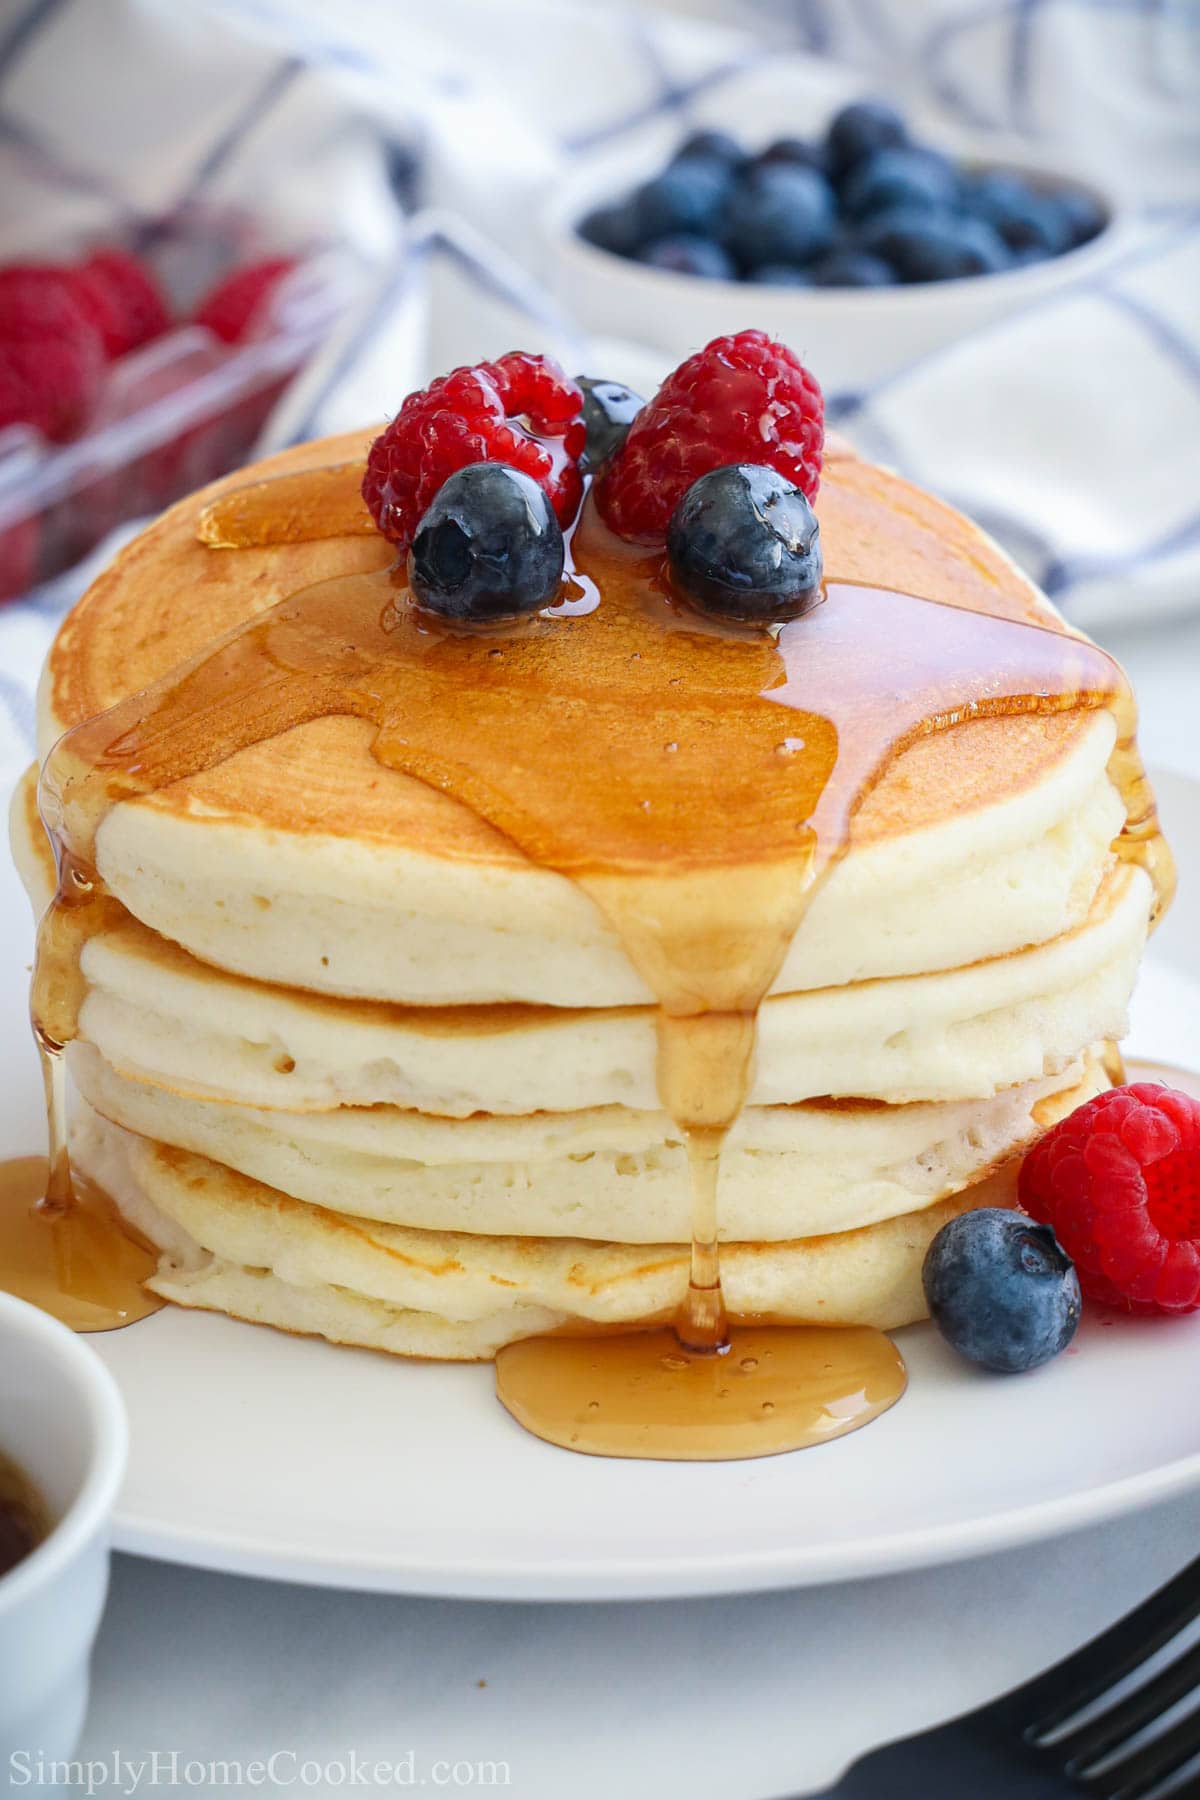 https://simplyhomecooked.com/wp-content/uploads/2022/08/buttermilk-pancakes.jpg